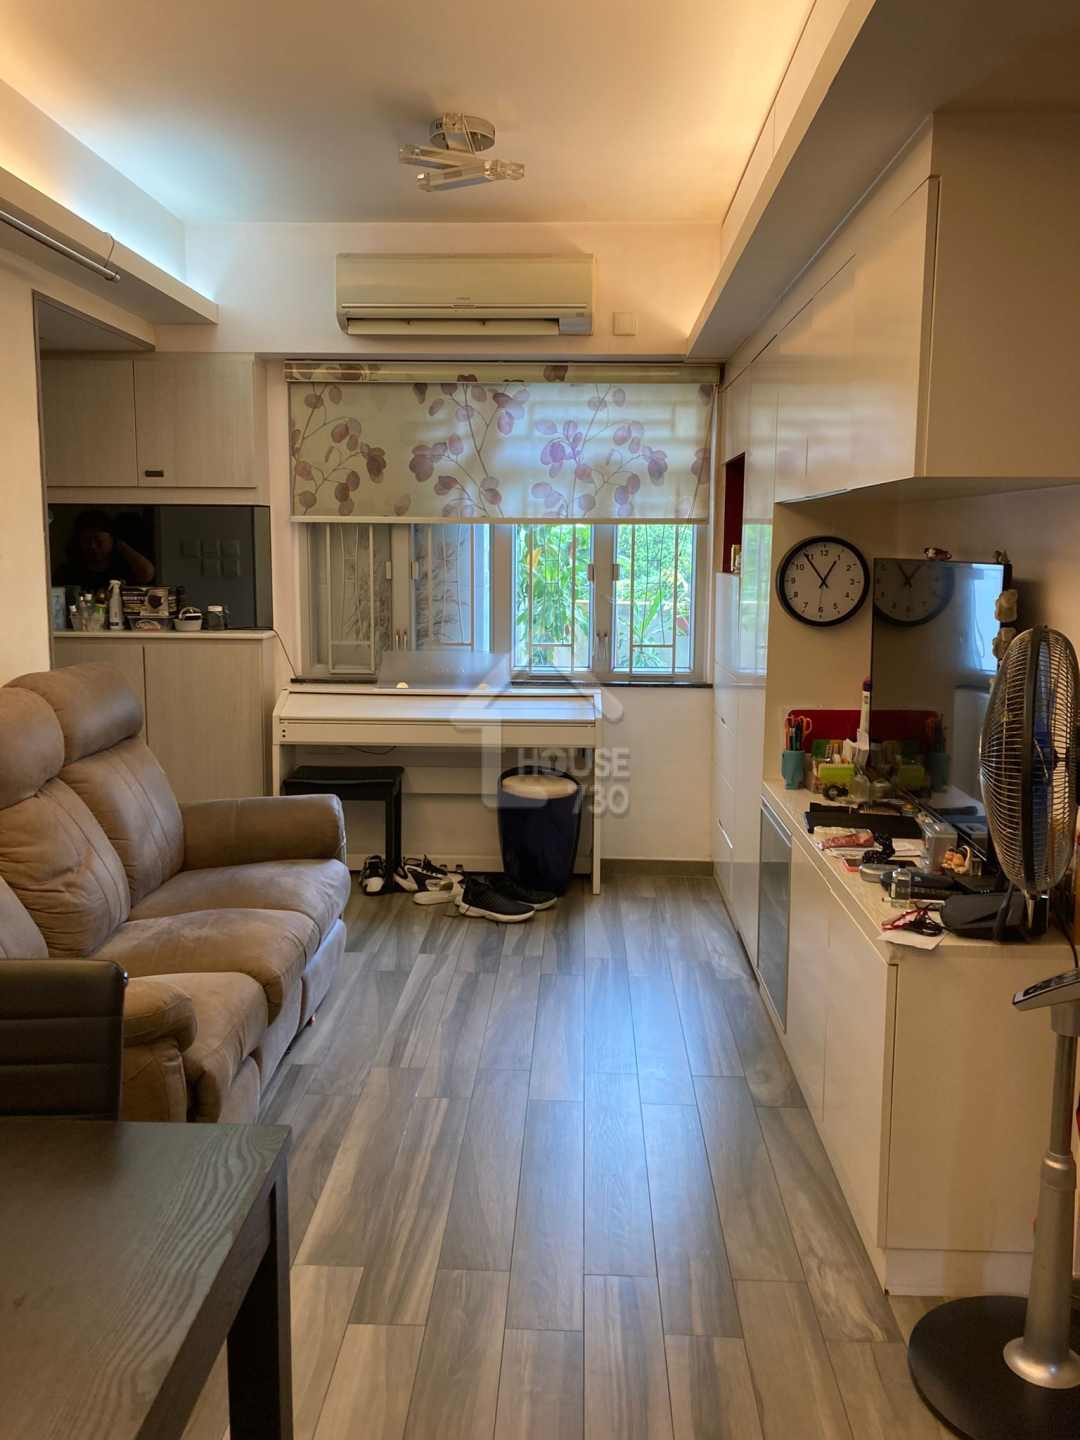 Sai Wan Ho PO MAN BUILDING Lower Floor Living Room House730-5988766